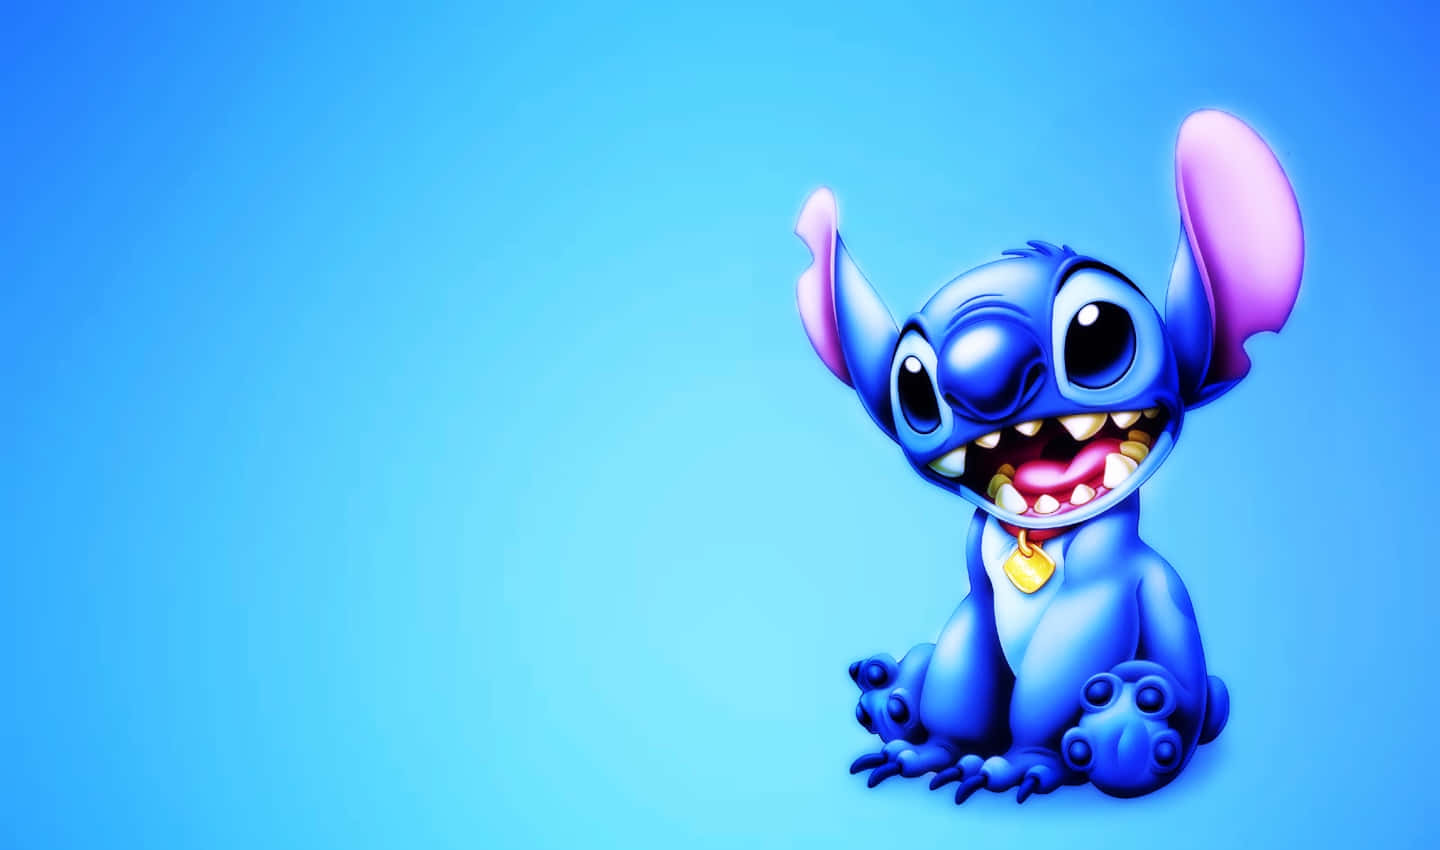 Cute Lilo and Stitch: Friends Forever Wallpaper